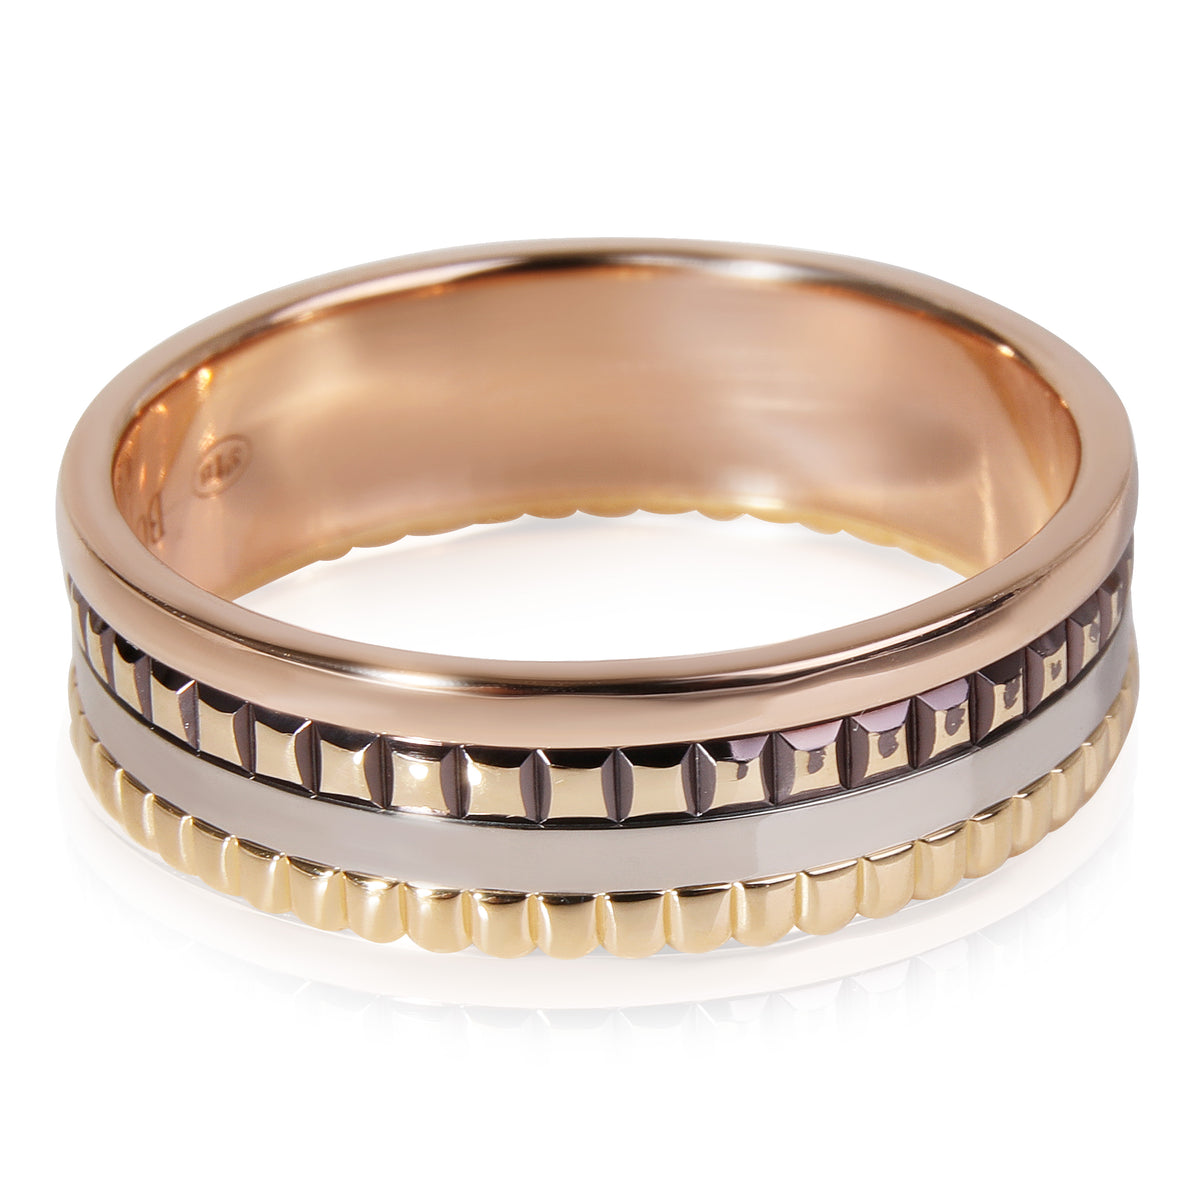 Boucheron Quatre Classique Small Ring in 18k 3 Tone Gold